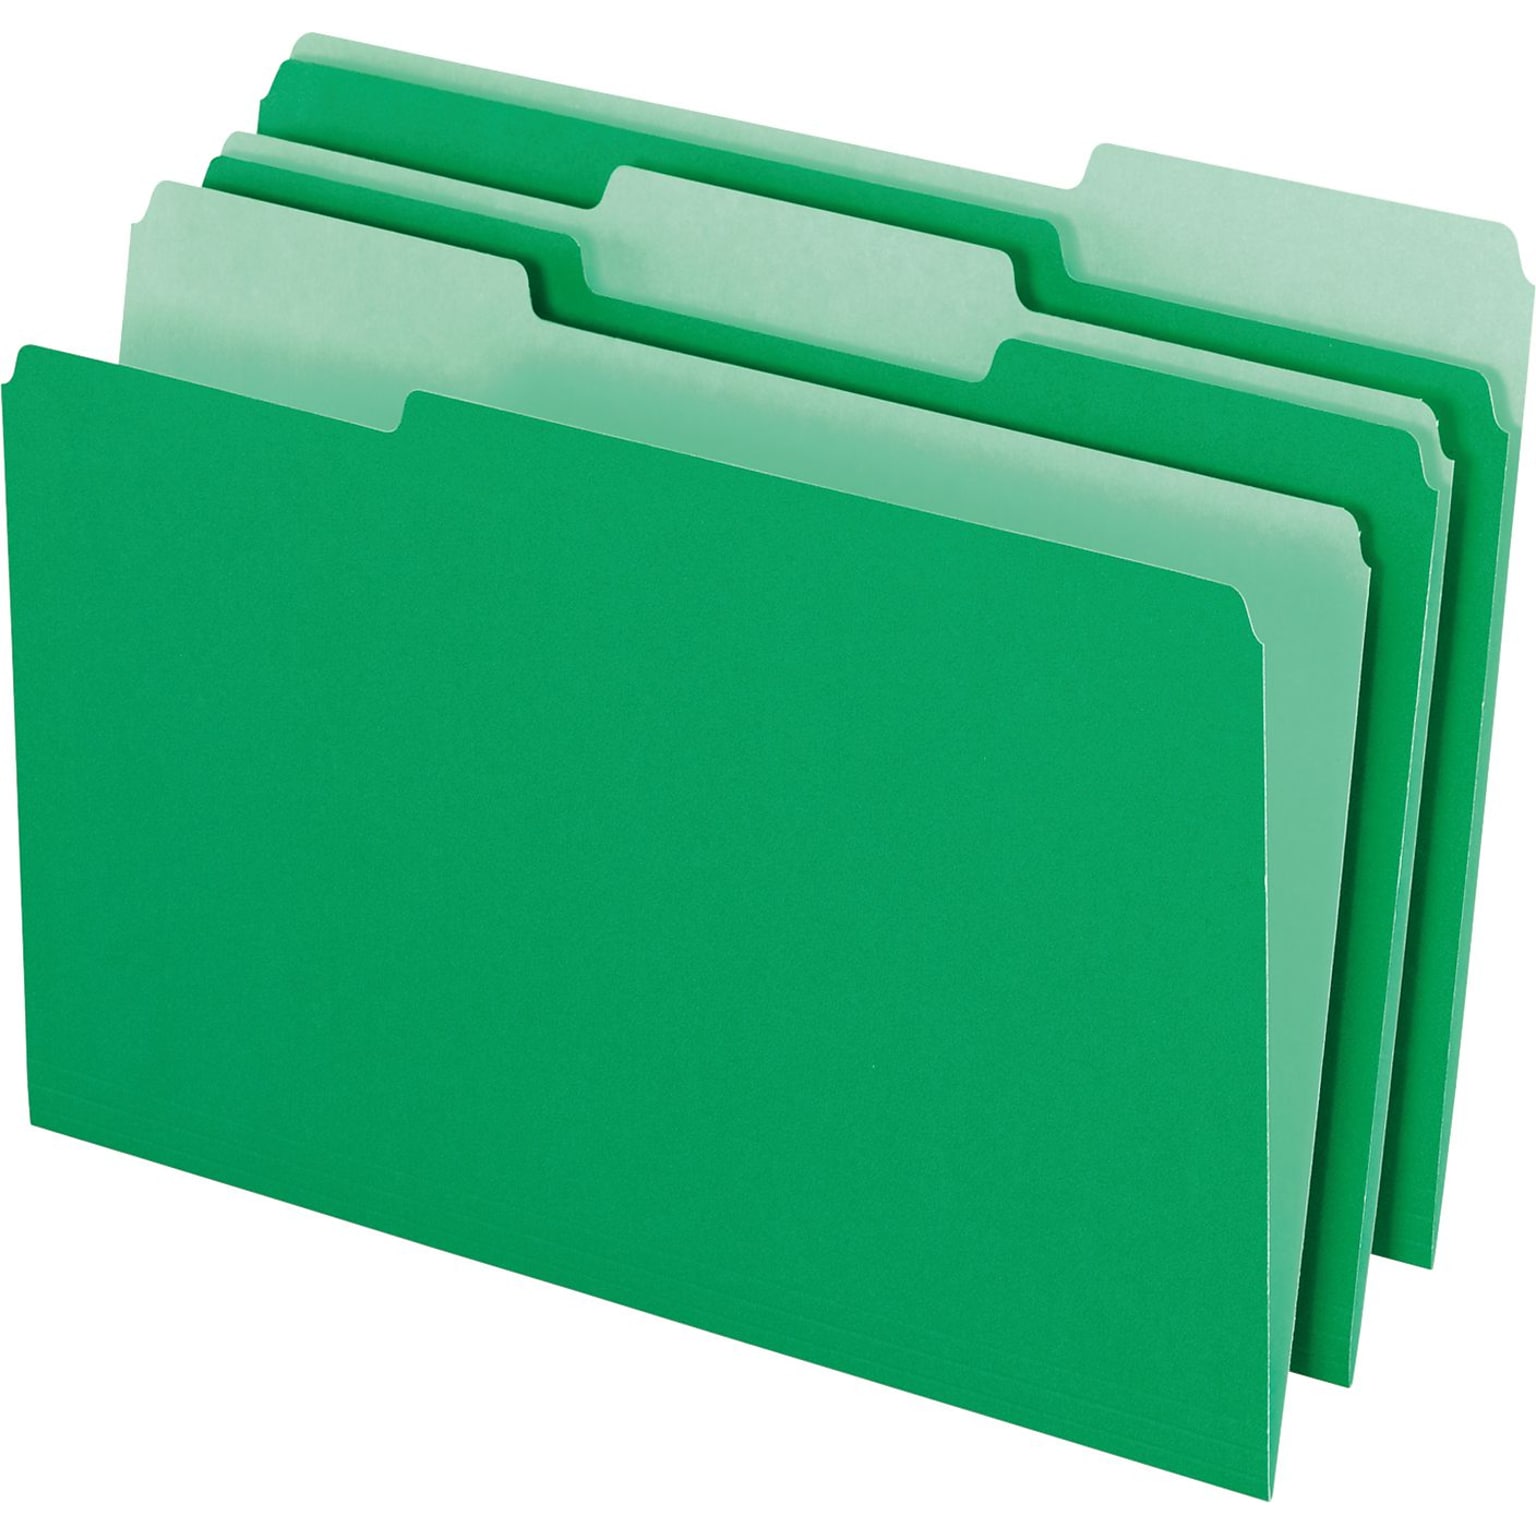 Pendaflex Colored File Folders, Legal, Bright Green, 100/Box (1531/3BGR)